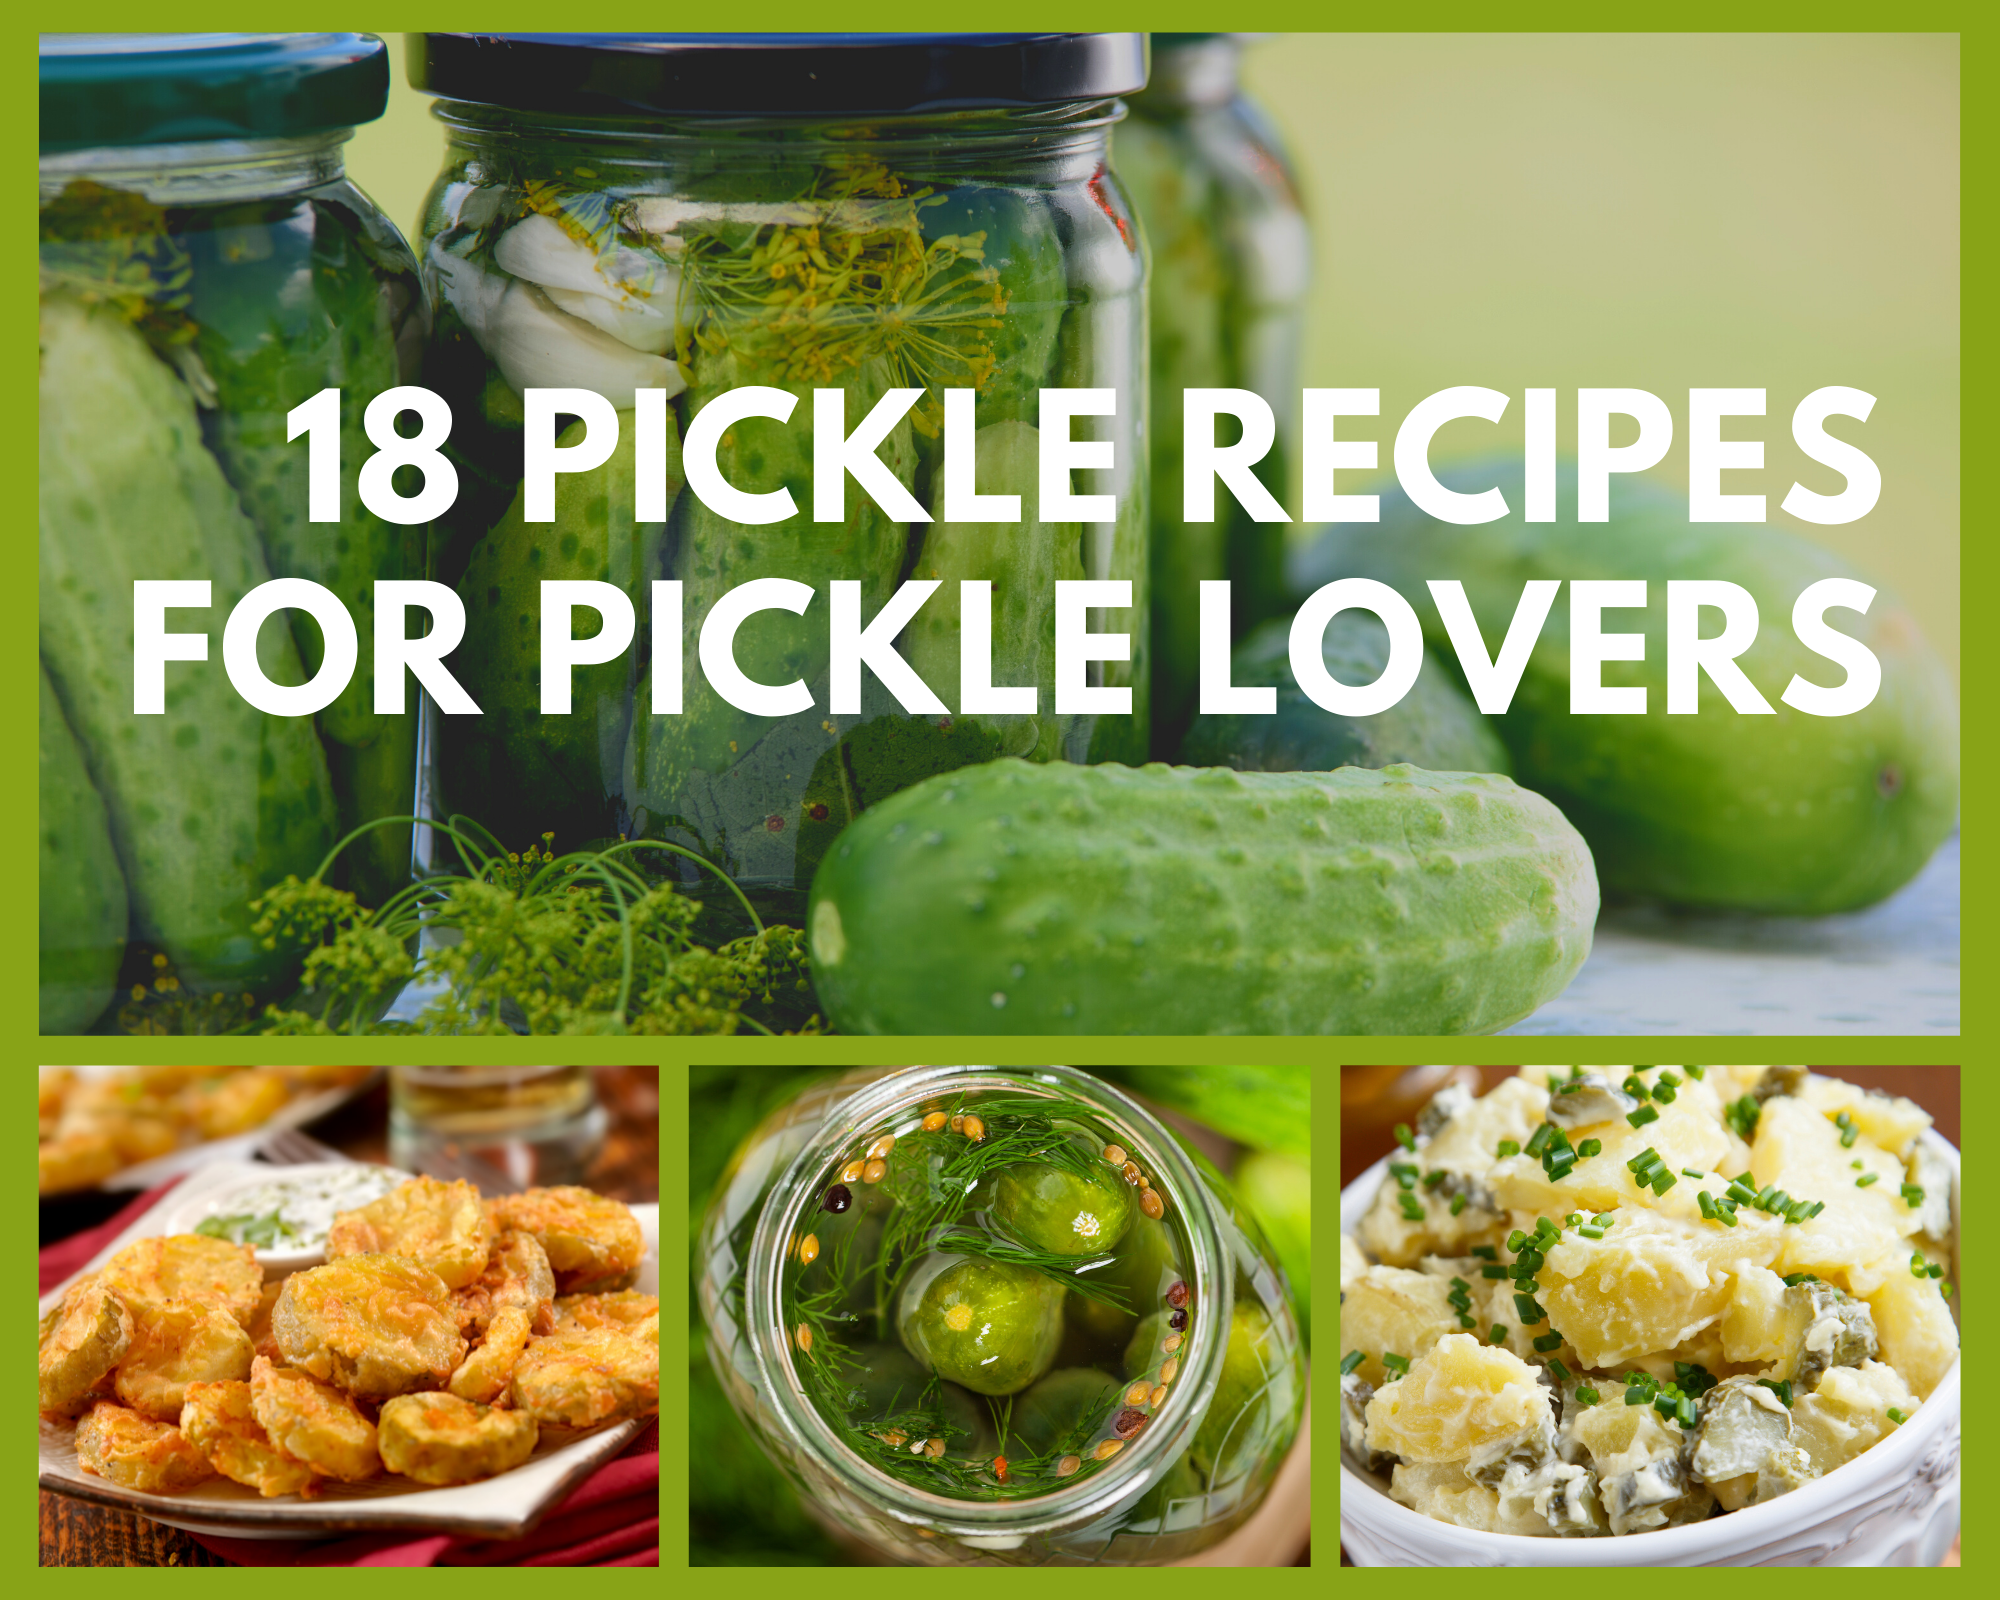 Pickle recipes